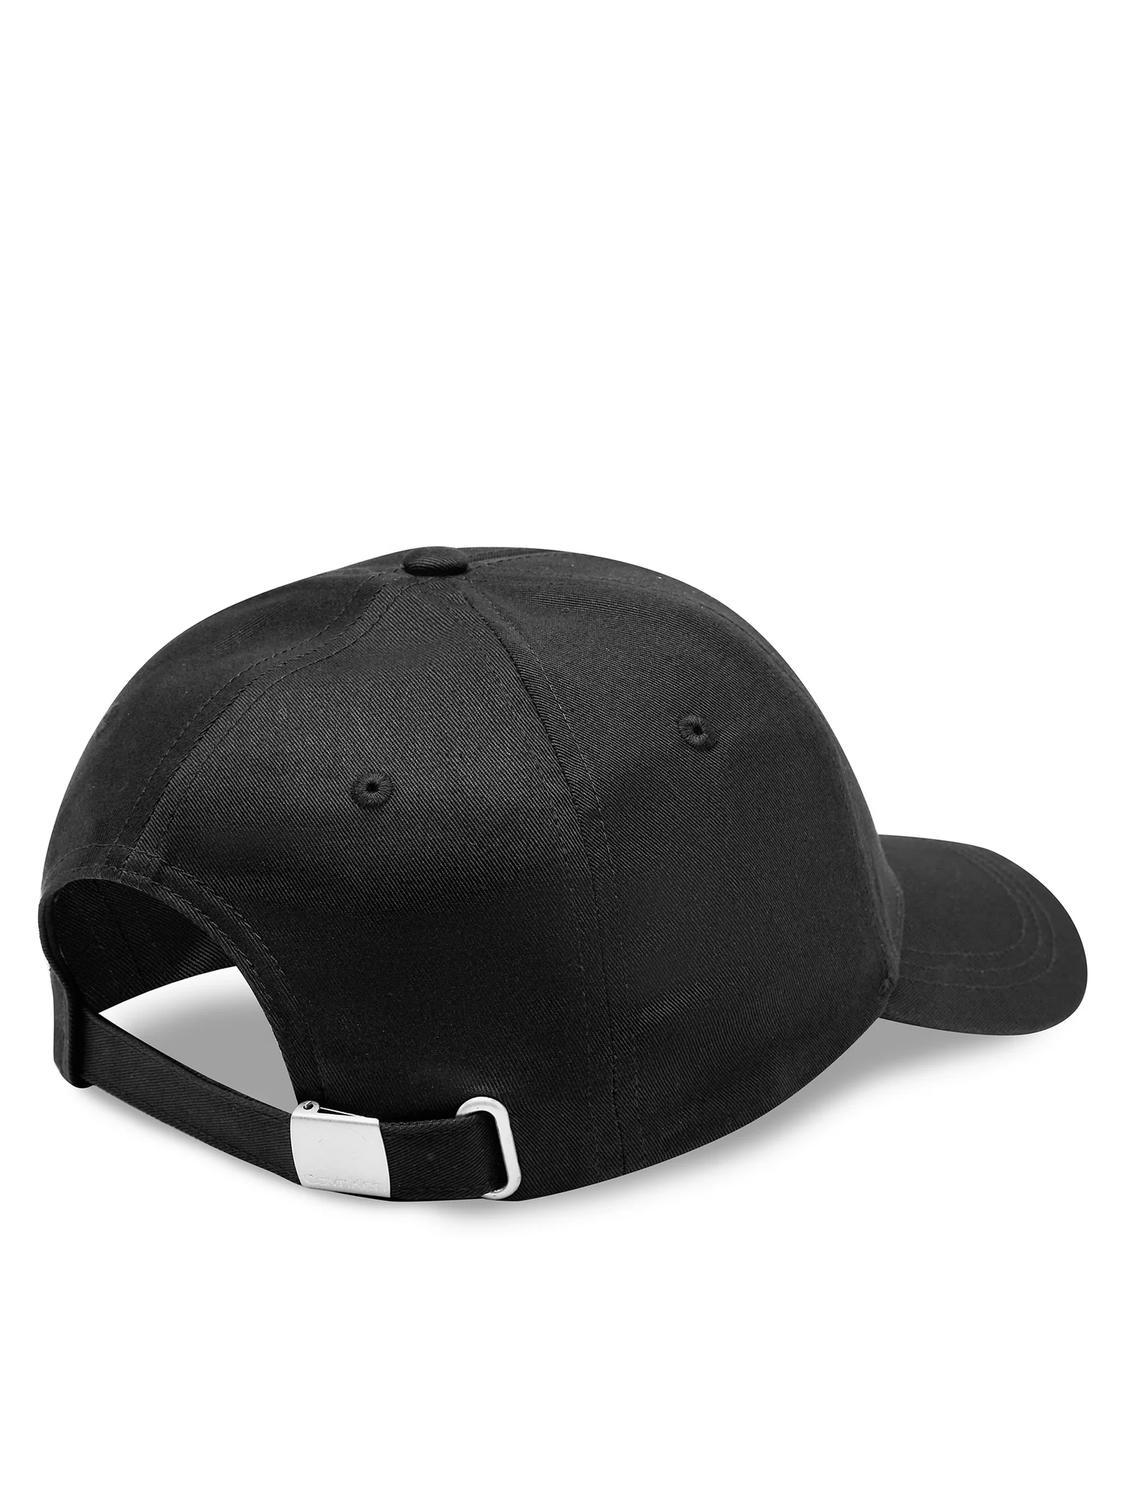 Calvin Klein Metal Lettering Bb Baseball Hat Ck Black - Buy At Outlet  Prices!